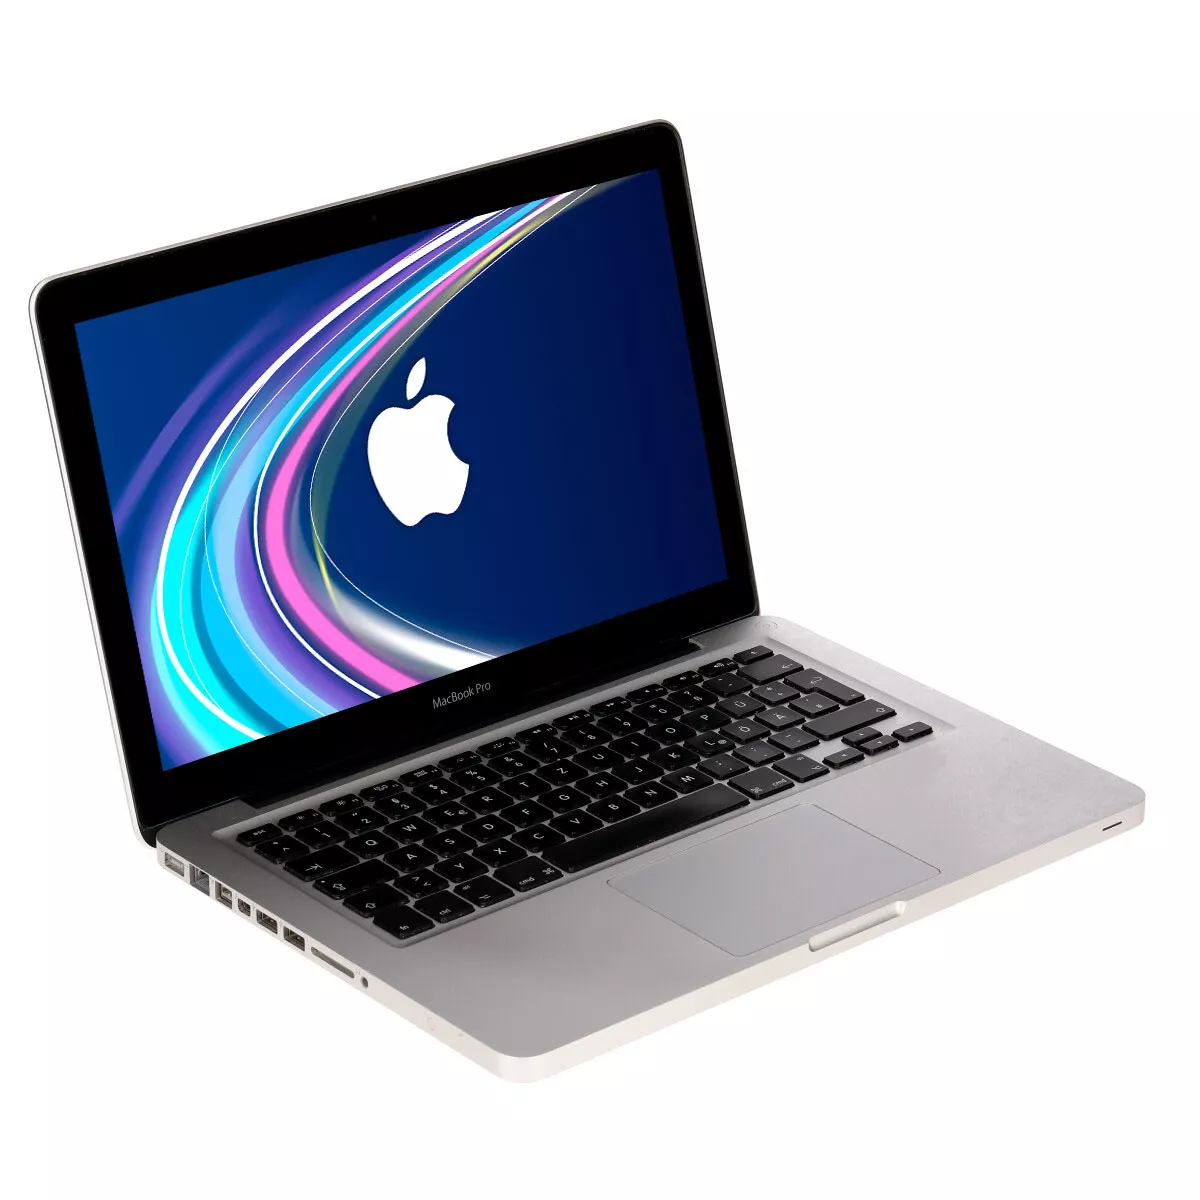 Apple MacBook Pro A1278 Core i5 3210M 2,5 GHz 4 GB 500 GB Webcam B-Ware